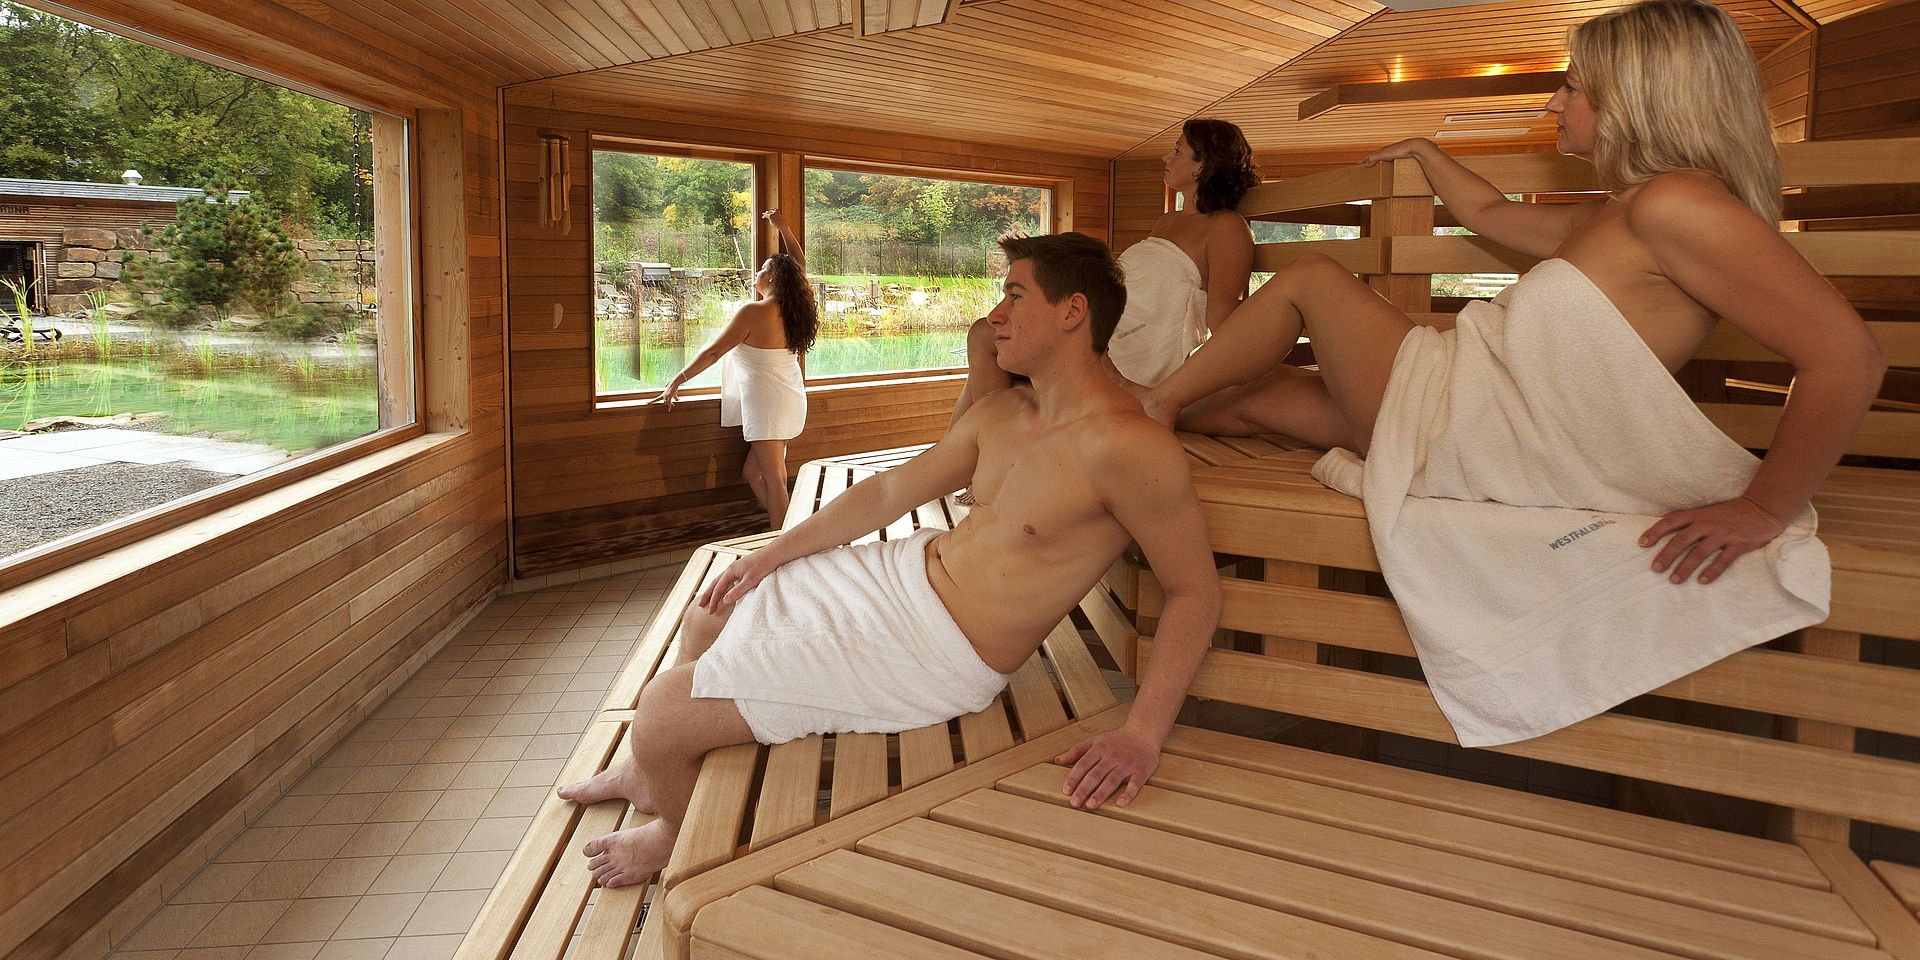 Sauna befreundete paare nackt erotik pt geschichte